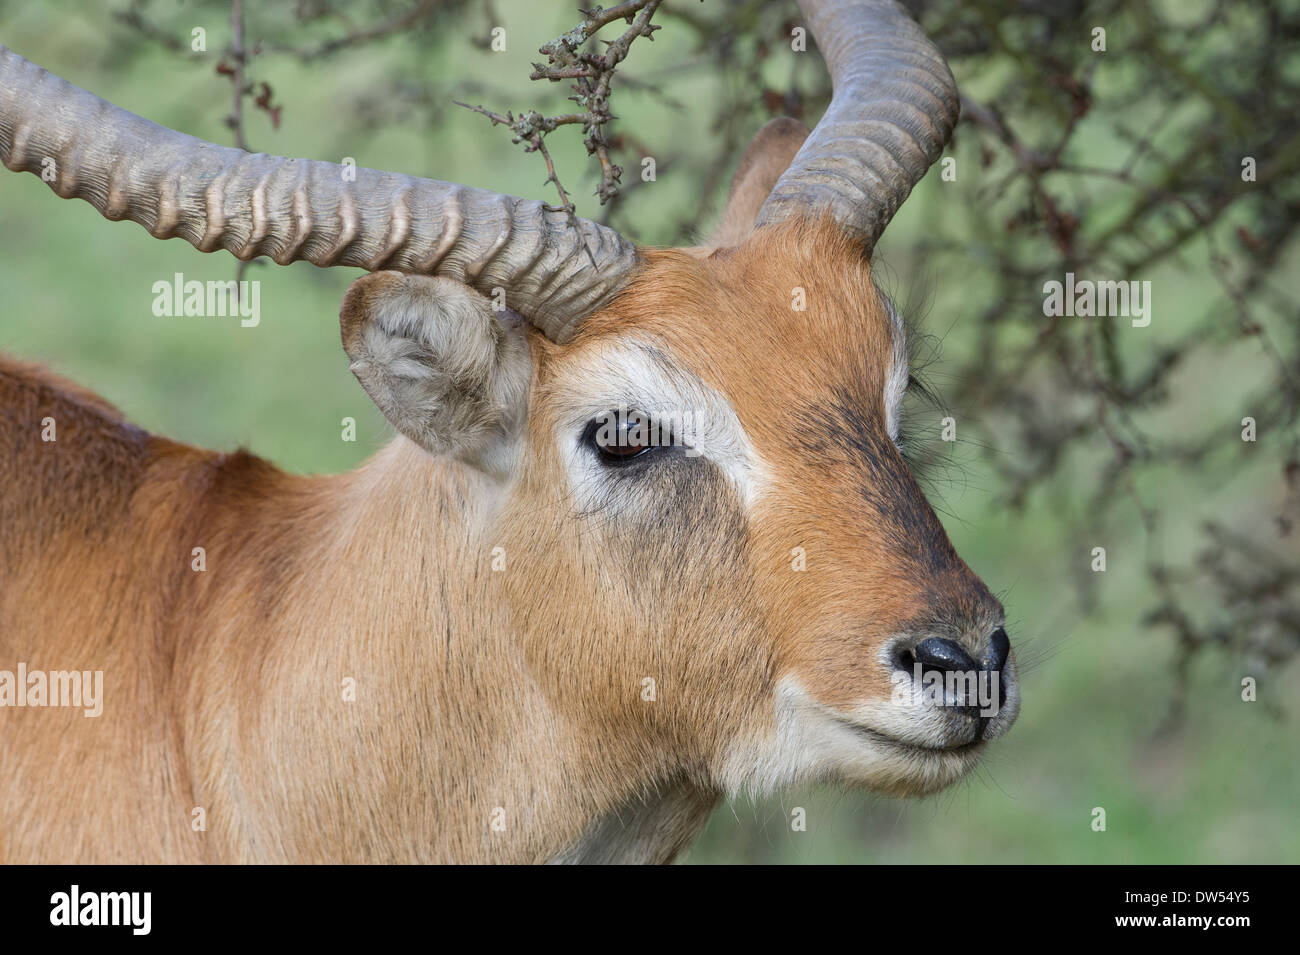 Blackbuck antelope (Antilope cervicapra) Stock Photo